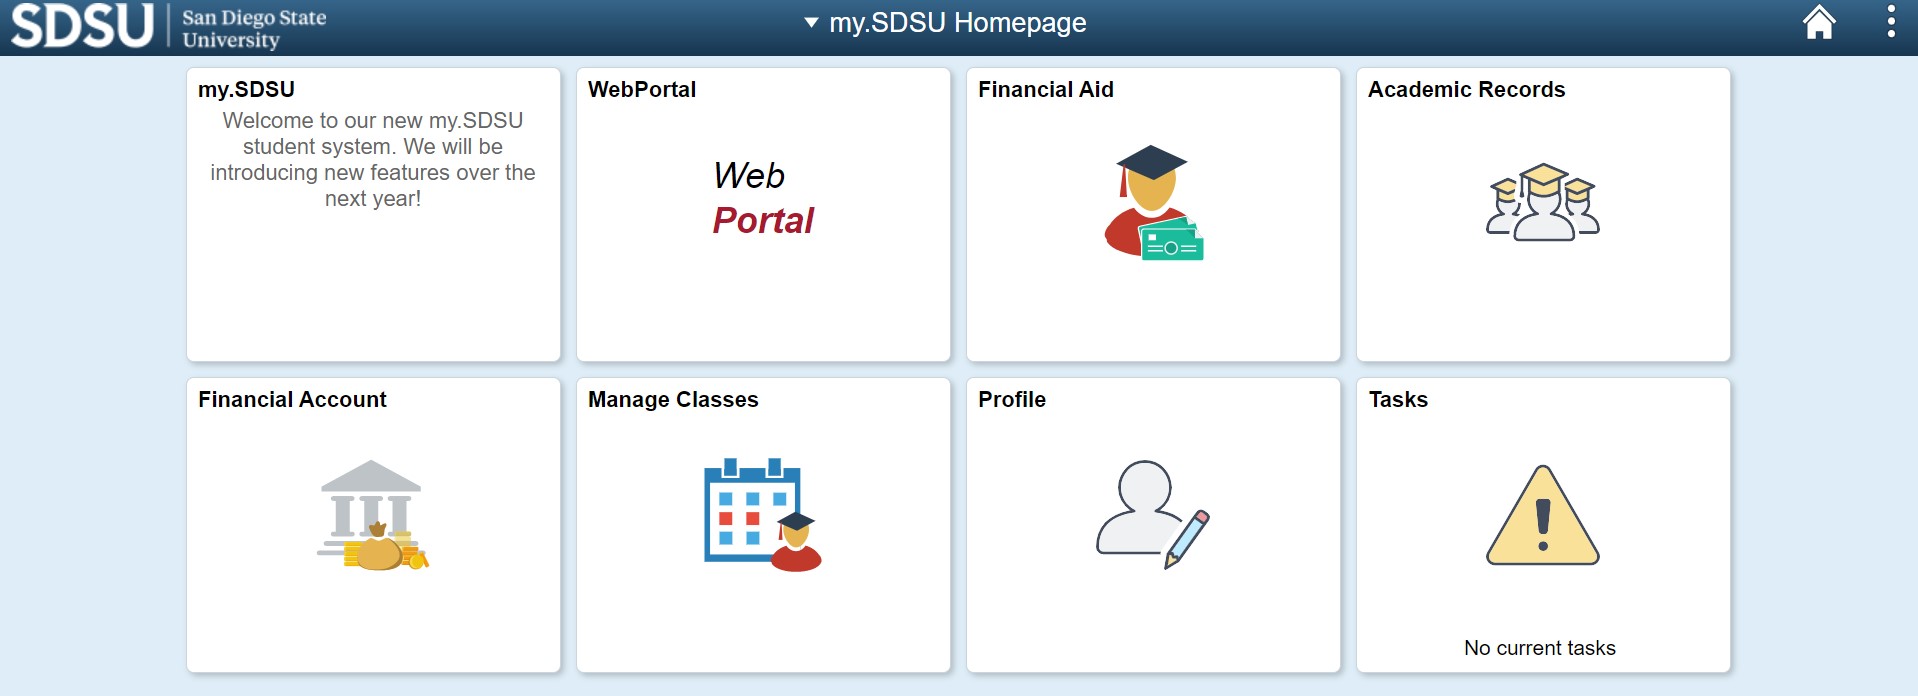 my.SDSU Home Page 